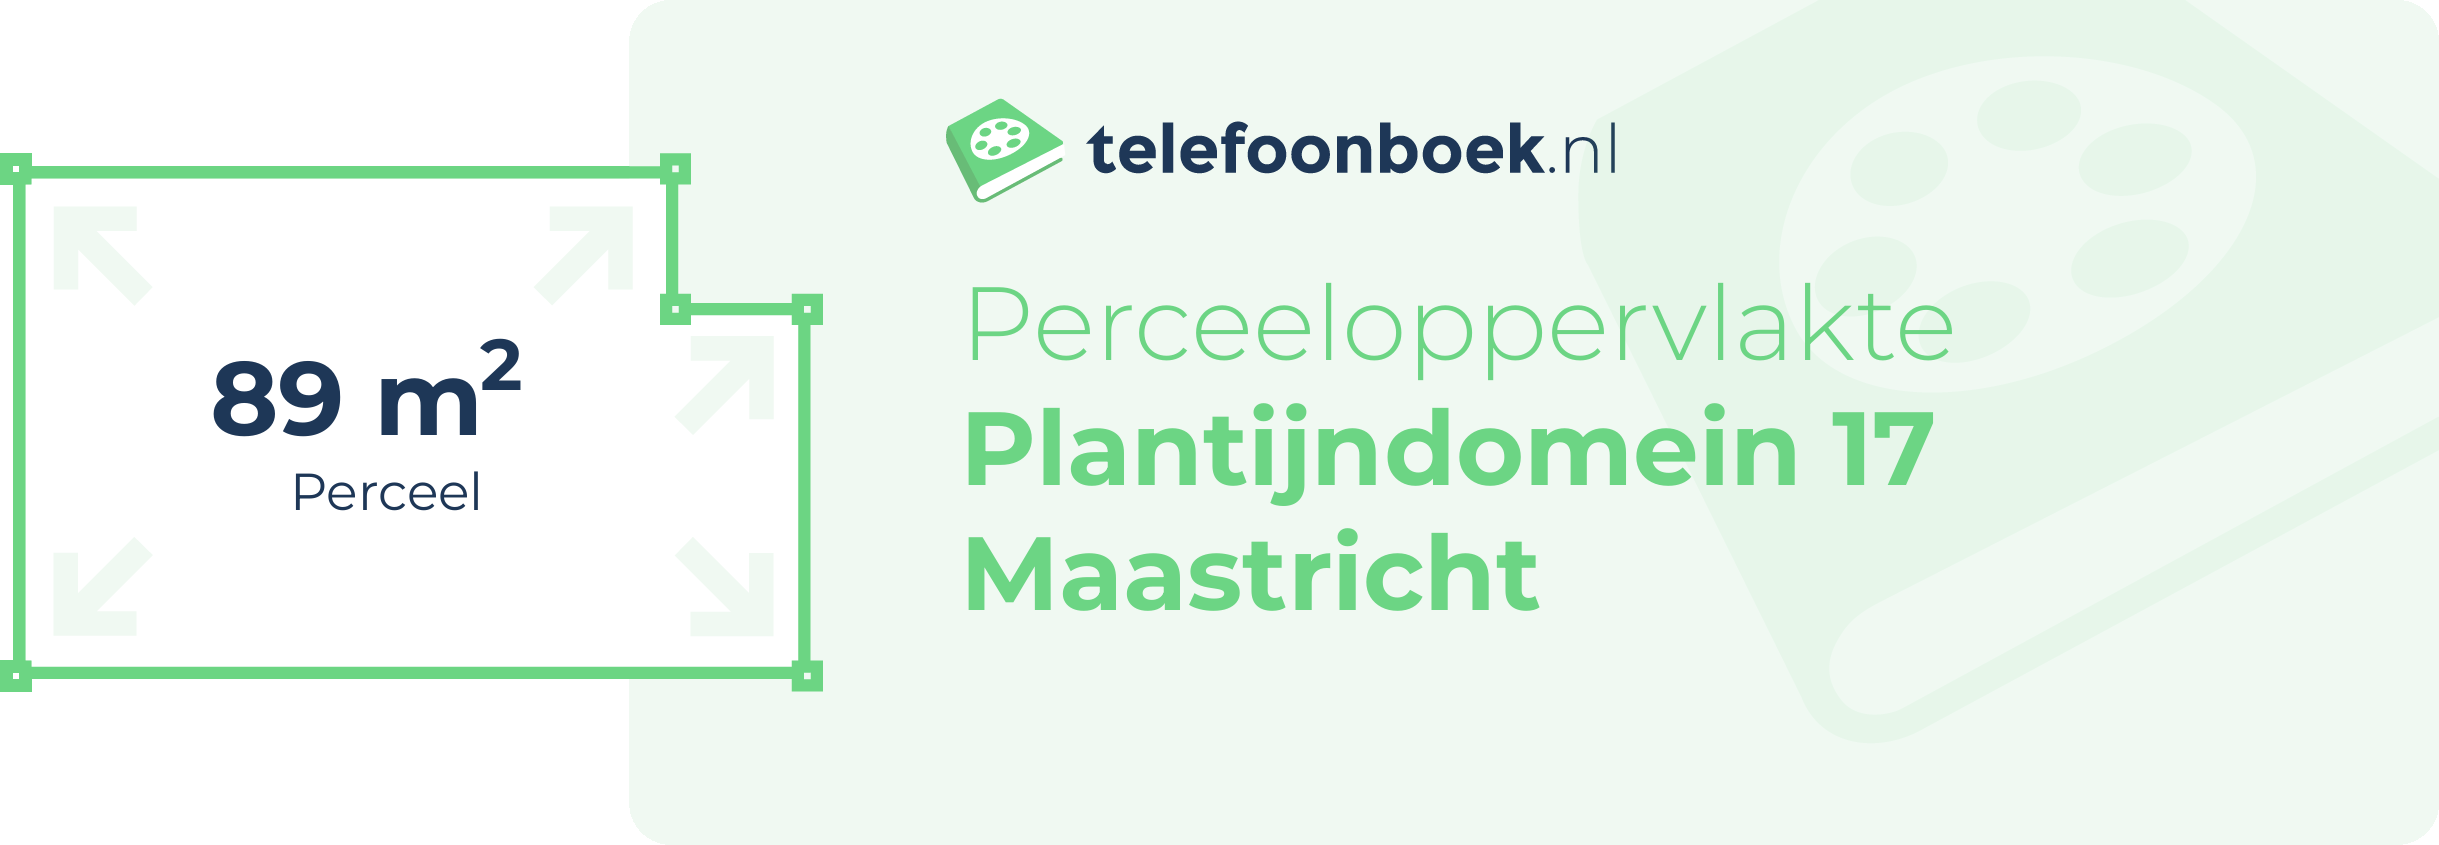 Perceeloppervlakte Plantijndomein 17 Maastricht